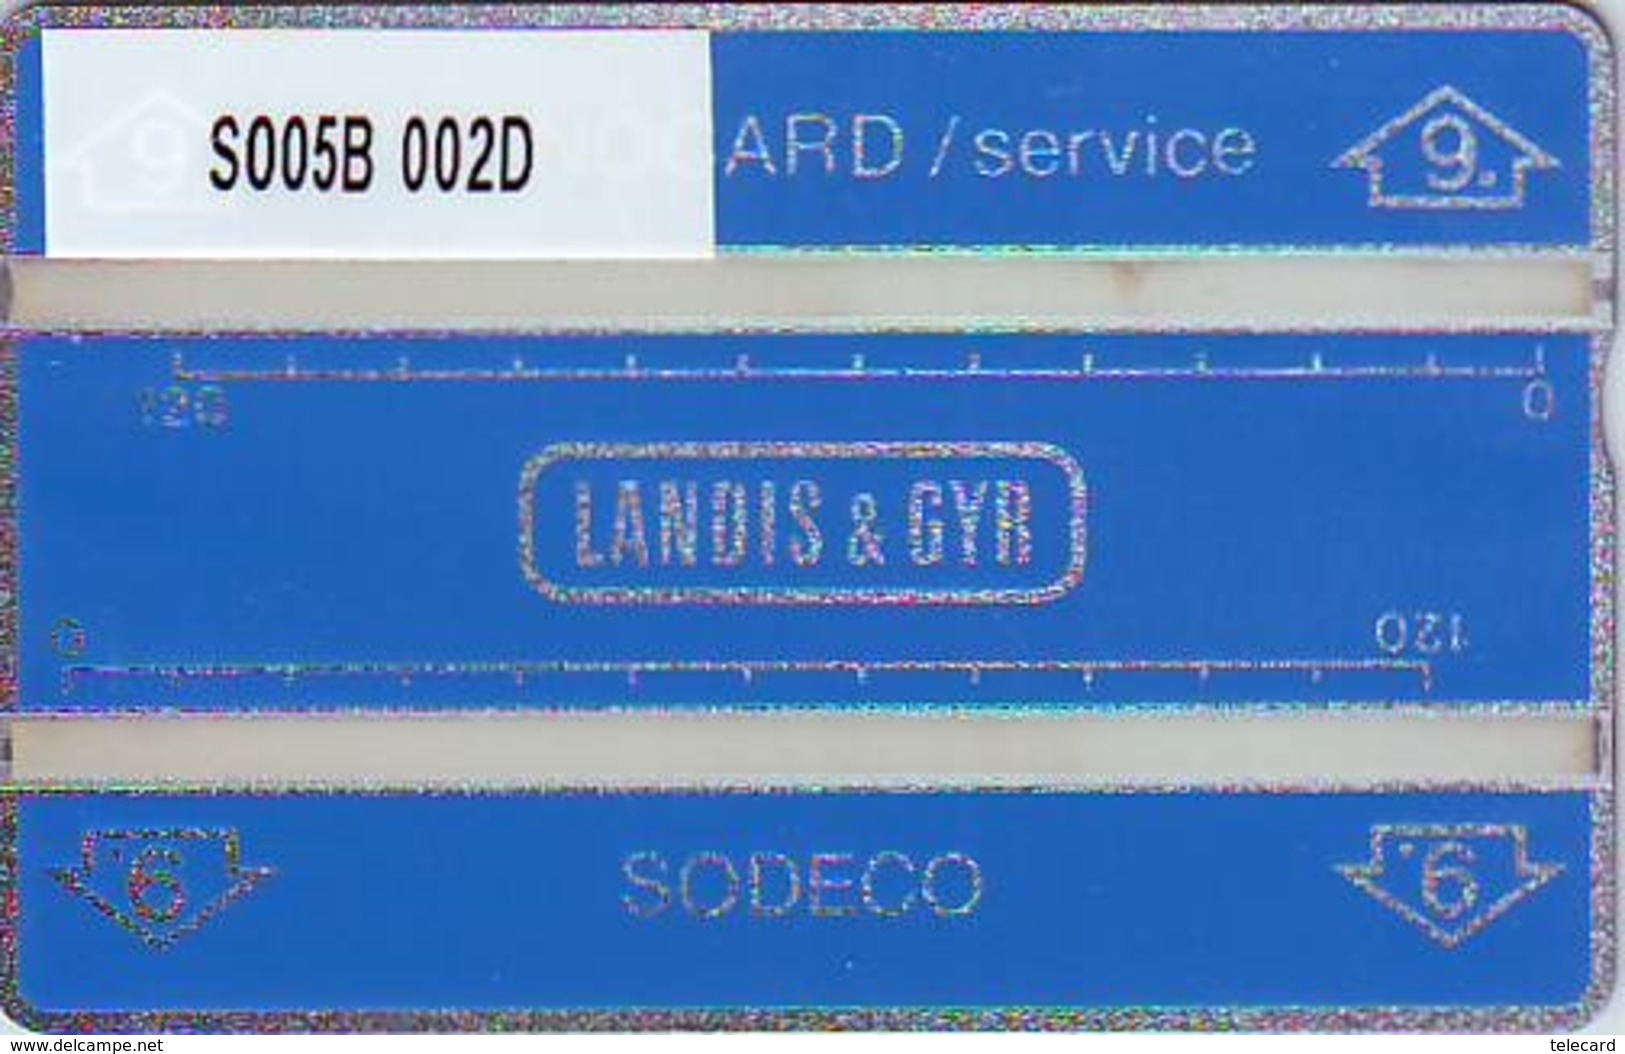 NEDERLAND LANDIS&GYR * SODECO * SERVICE CARD NR S005B 002D  "9"  3 Mm ONGEBRUIKT *  MINT - [4] Test- U. Dienstkarten